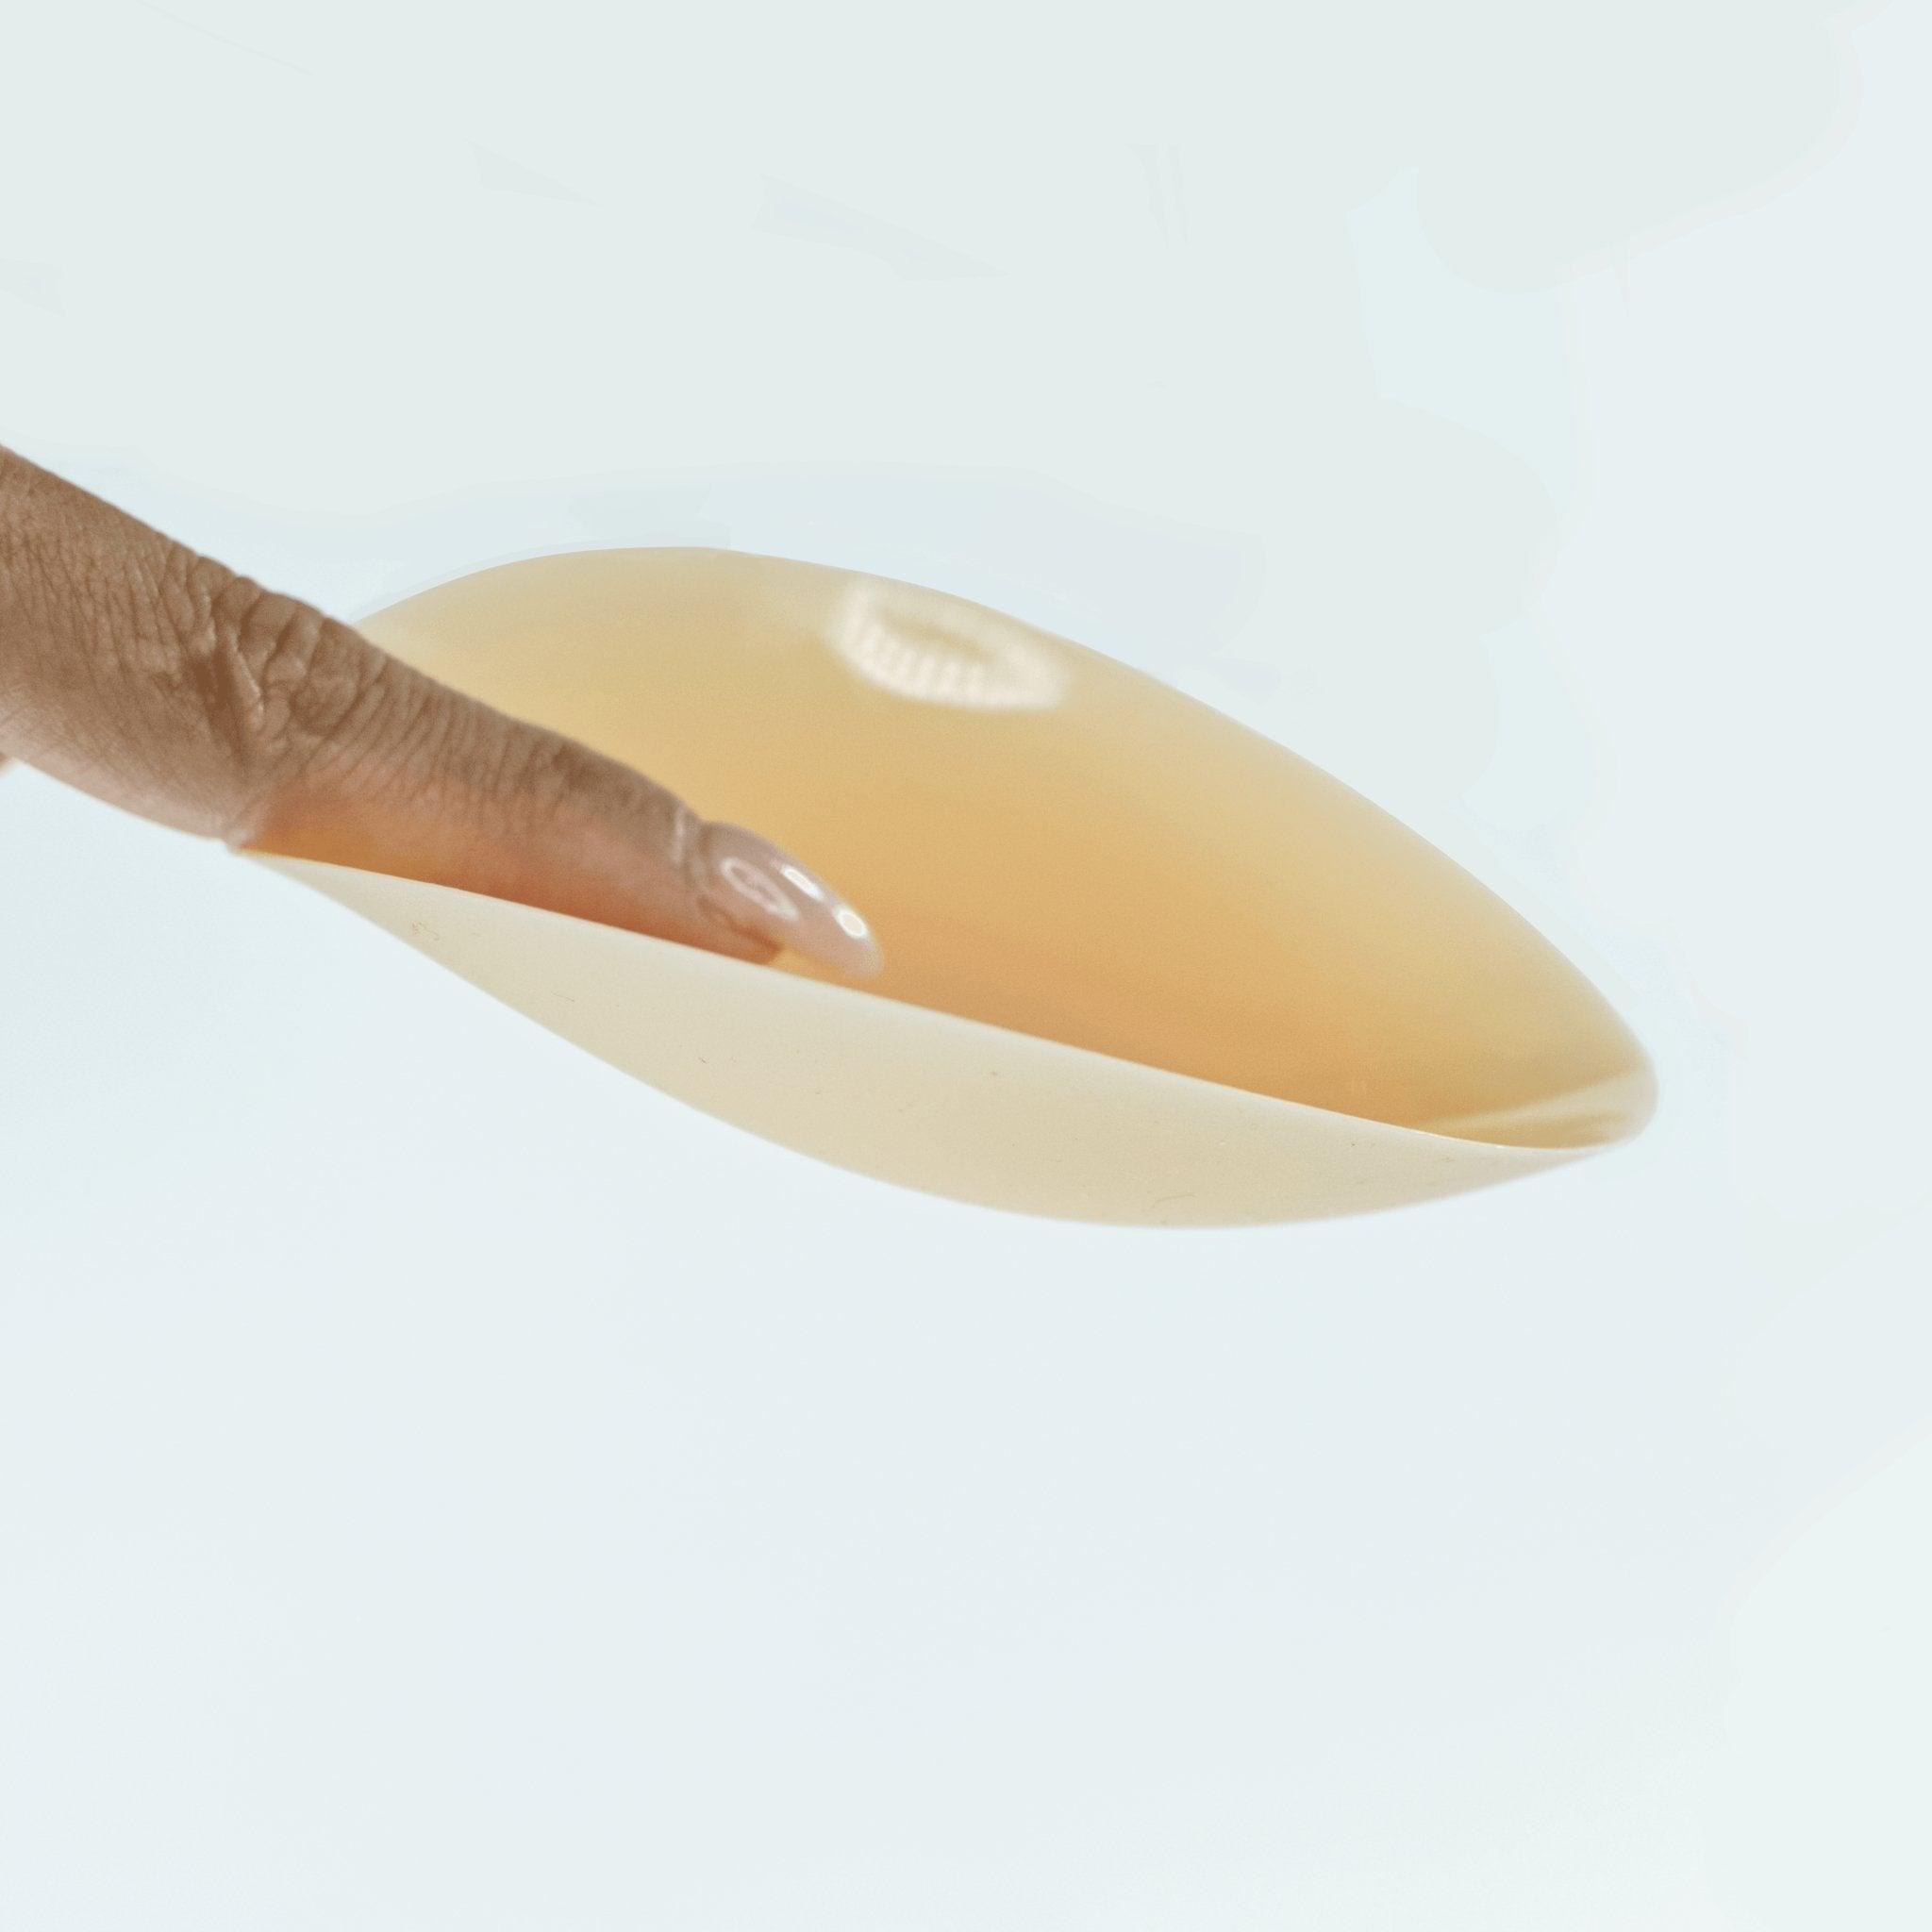 Self-Adhesive Silicone Nipple Covers